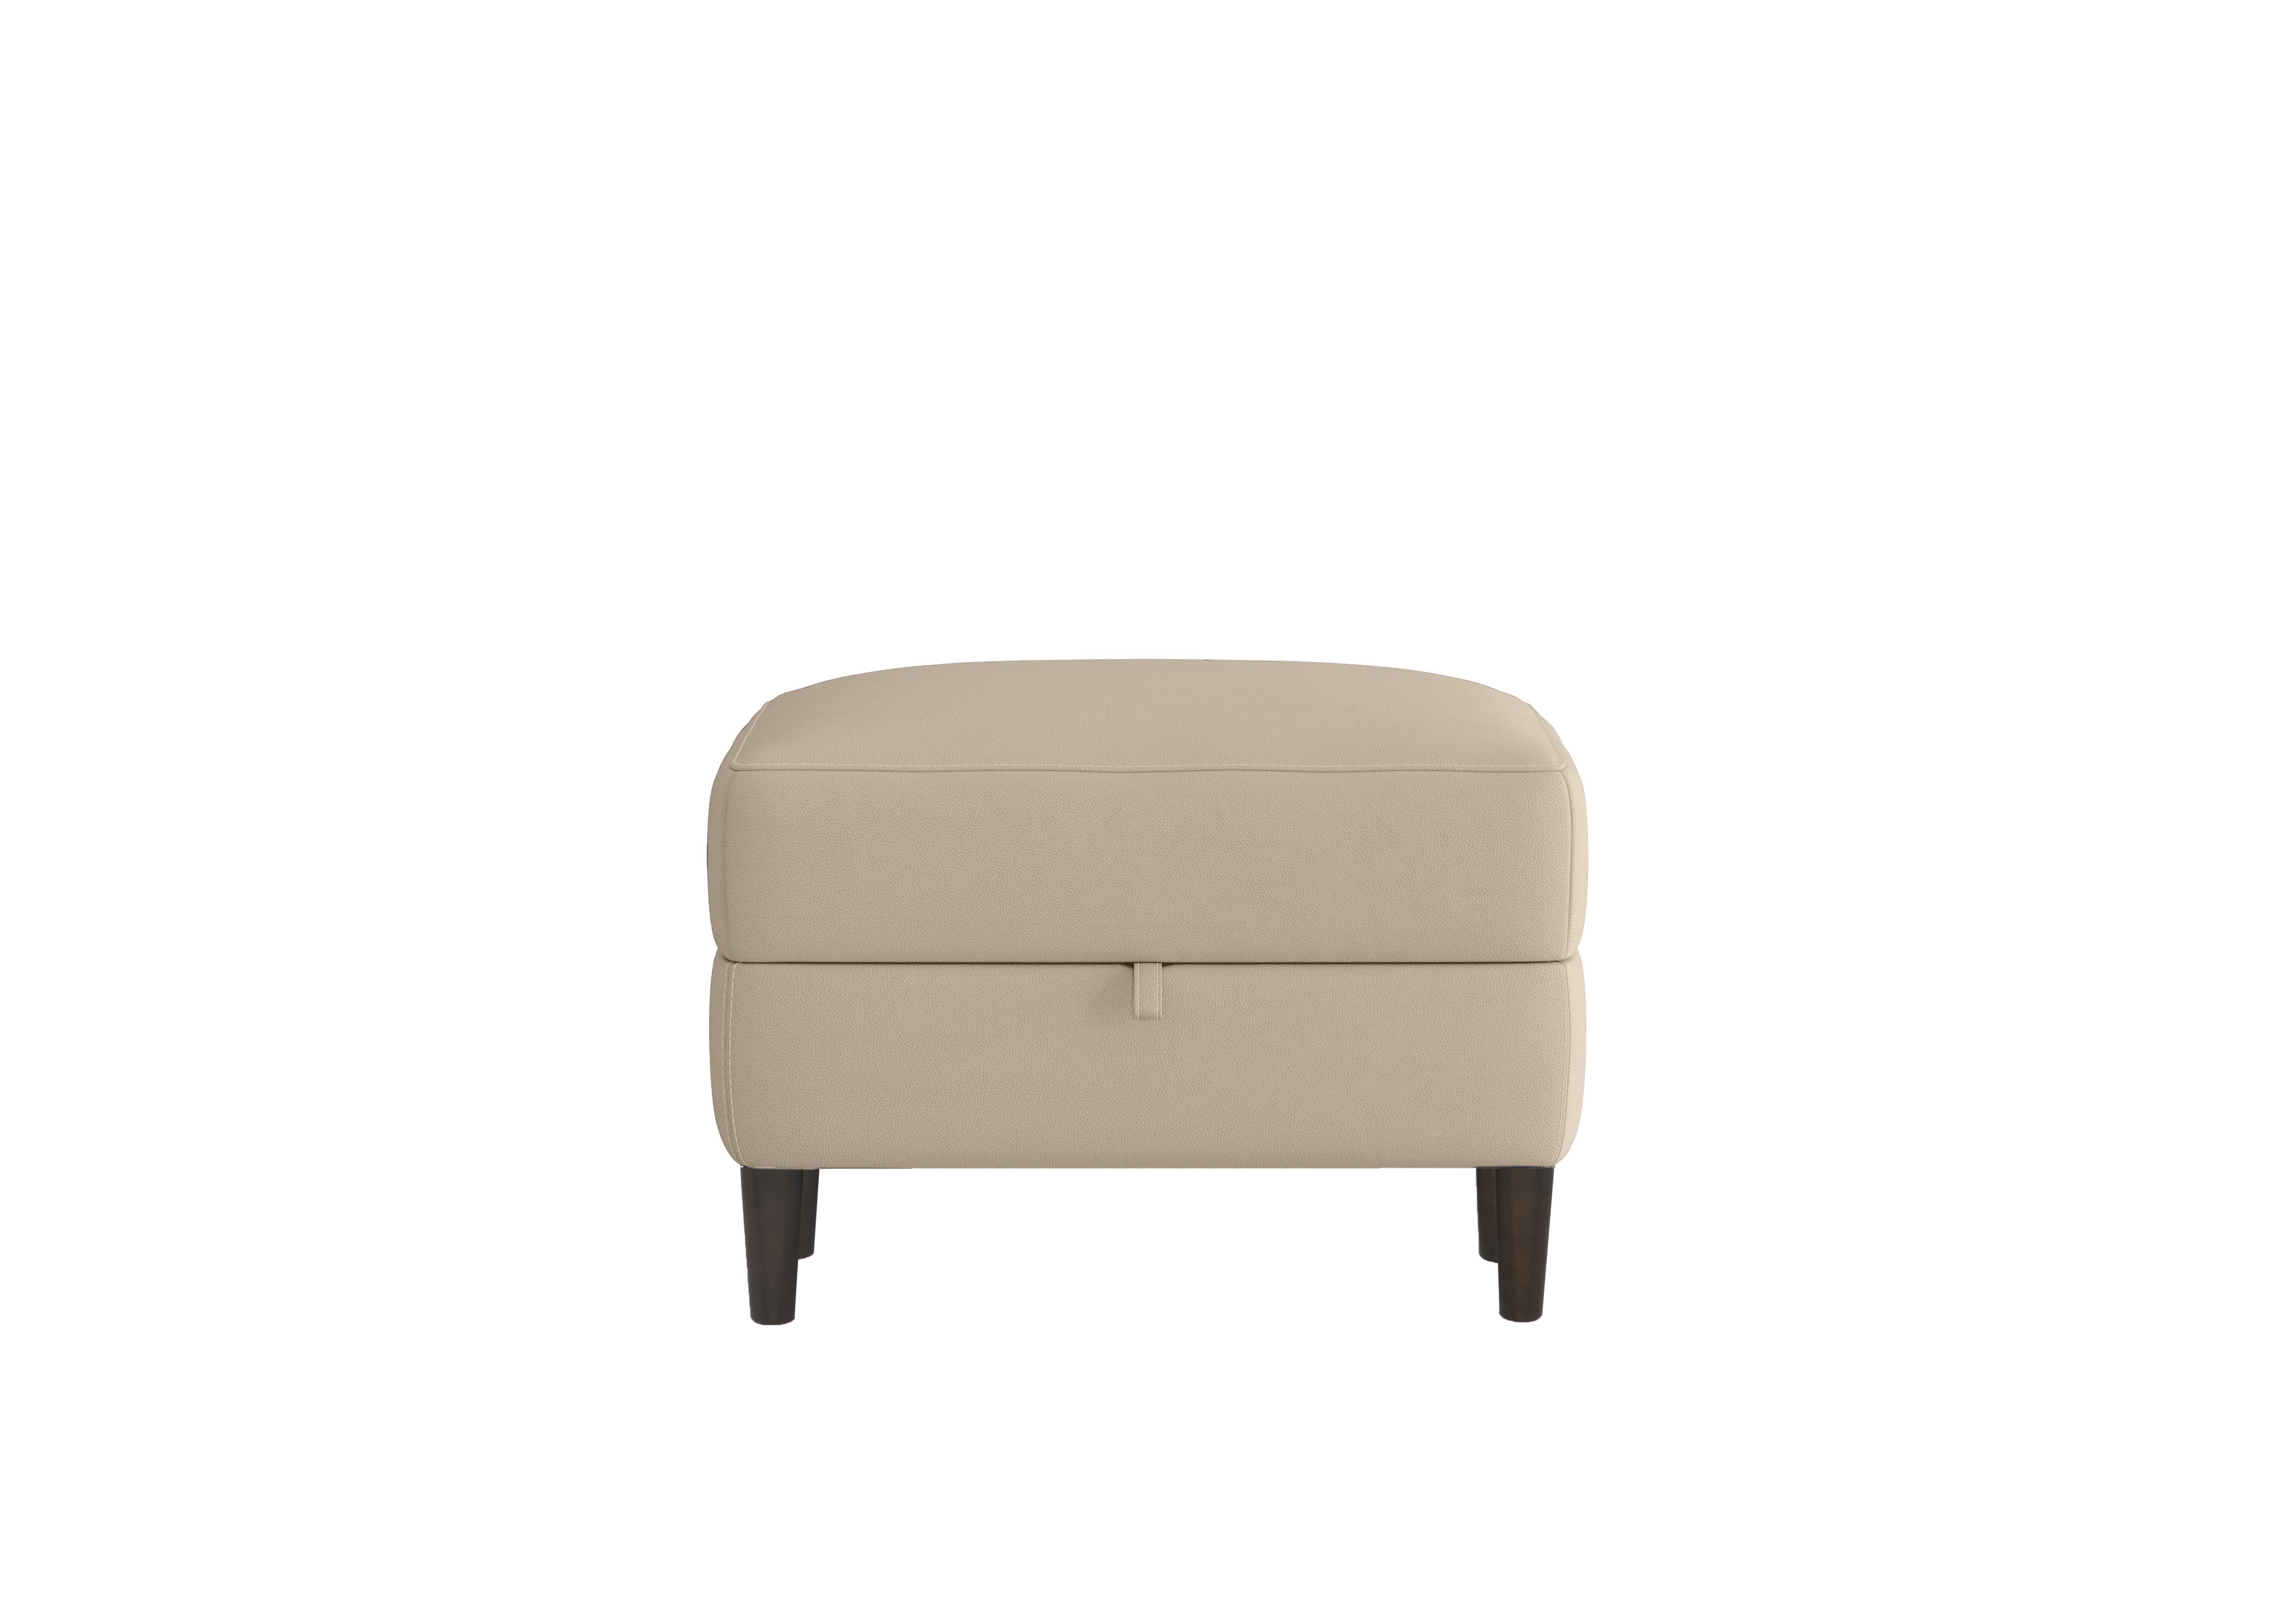 Uno Leather Storage Footstool in Bv-041e Dapple Grey on Furniture Village